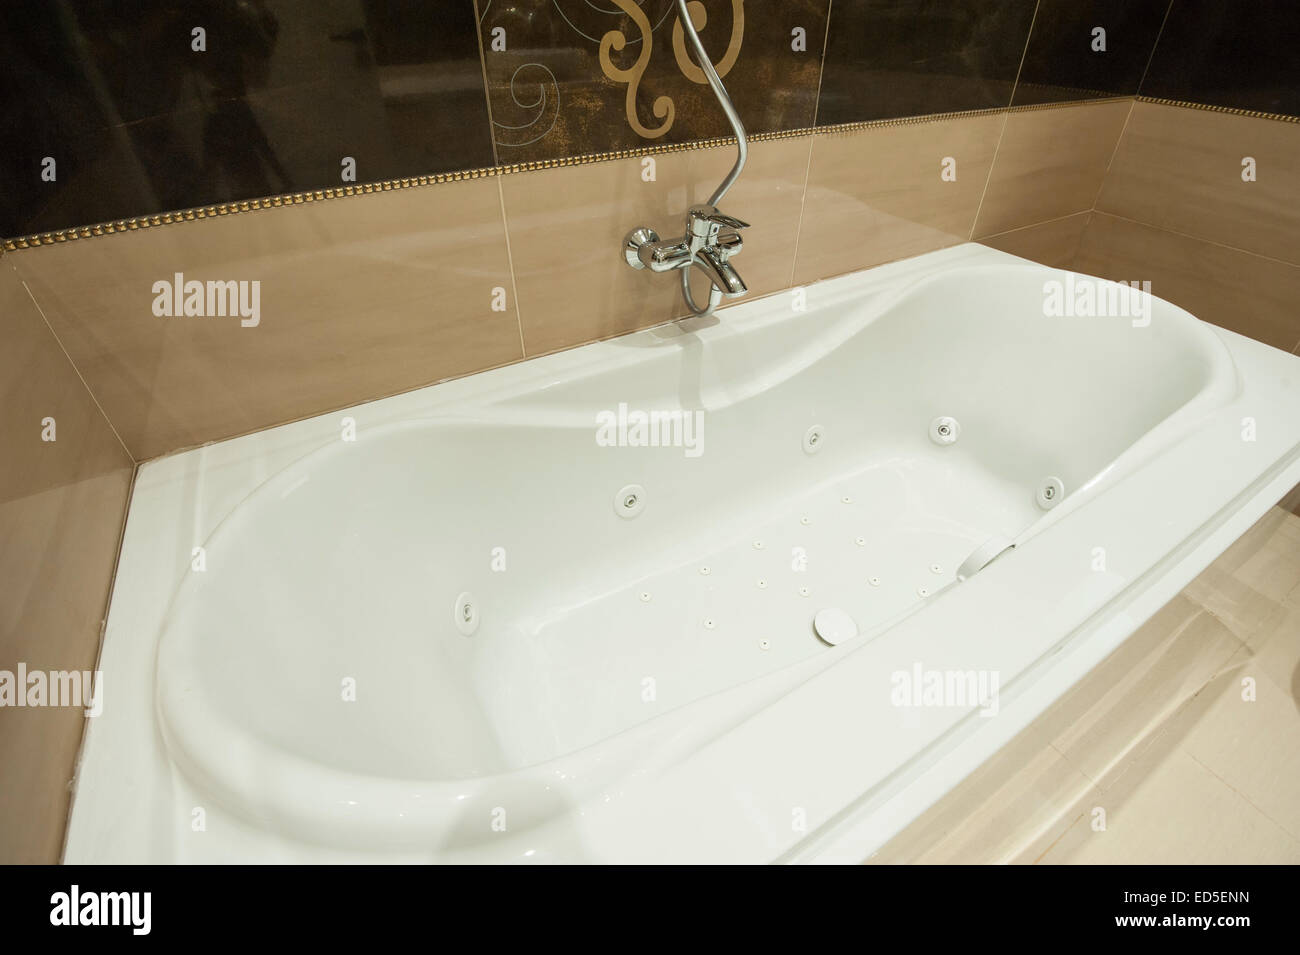 Luxury jacuzzi bath tub in bathroom of apartment Stock Photo